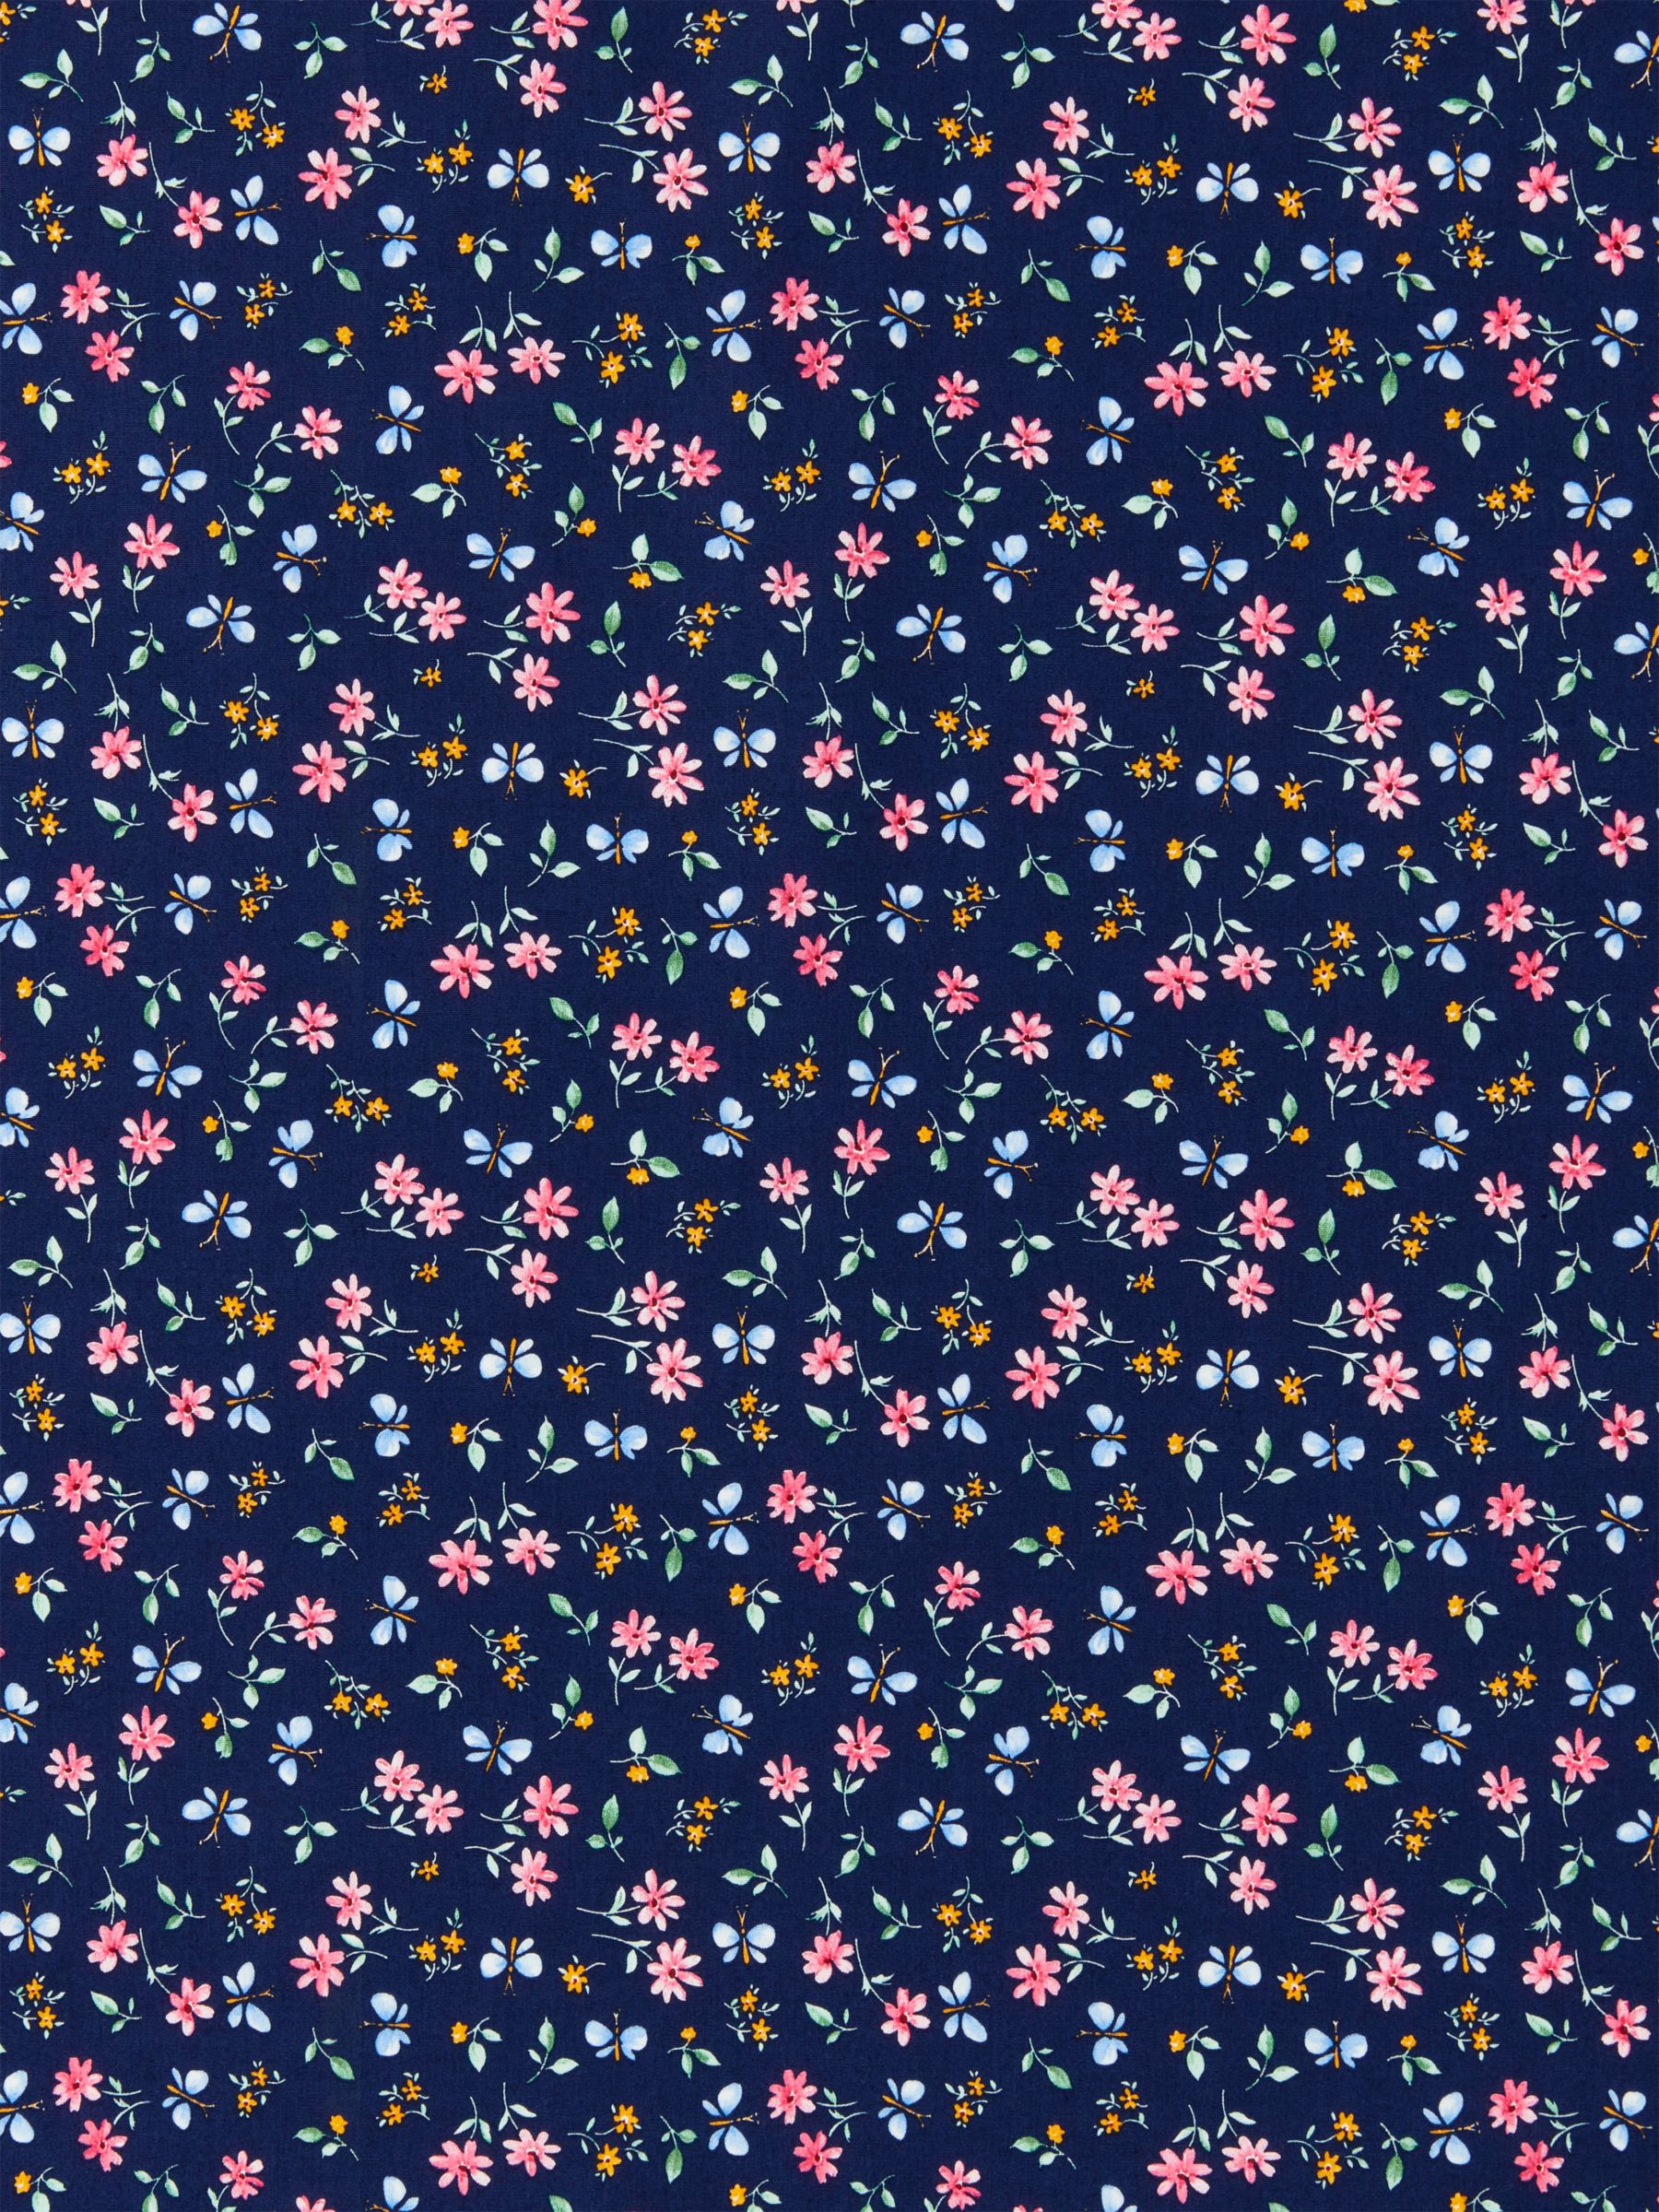 Oddies Textiles Flowers and Butterflies Print Fabric, Navy